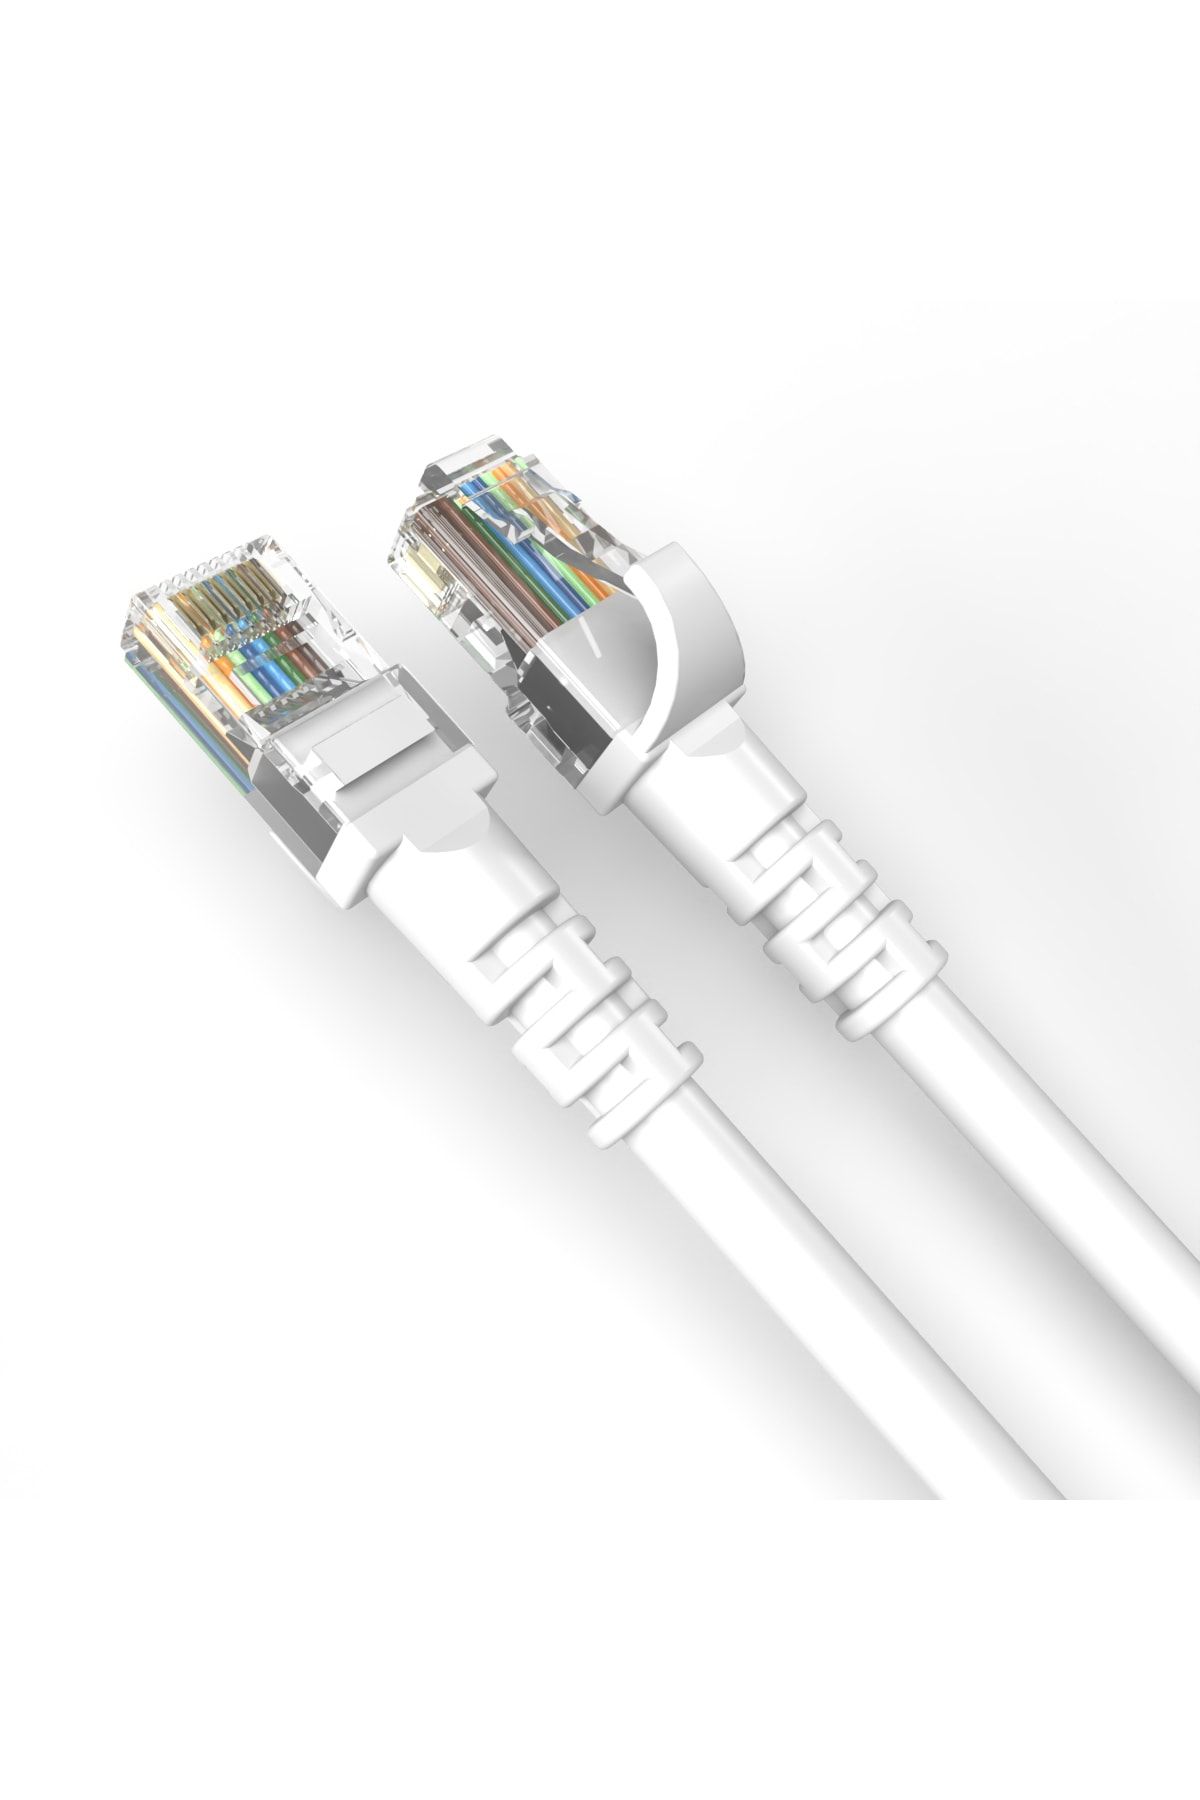 DERKAB 30 Metre Cat6 Network-Ağ-Ethernet Kablosu Beyaz